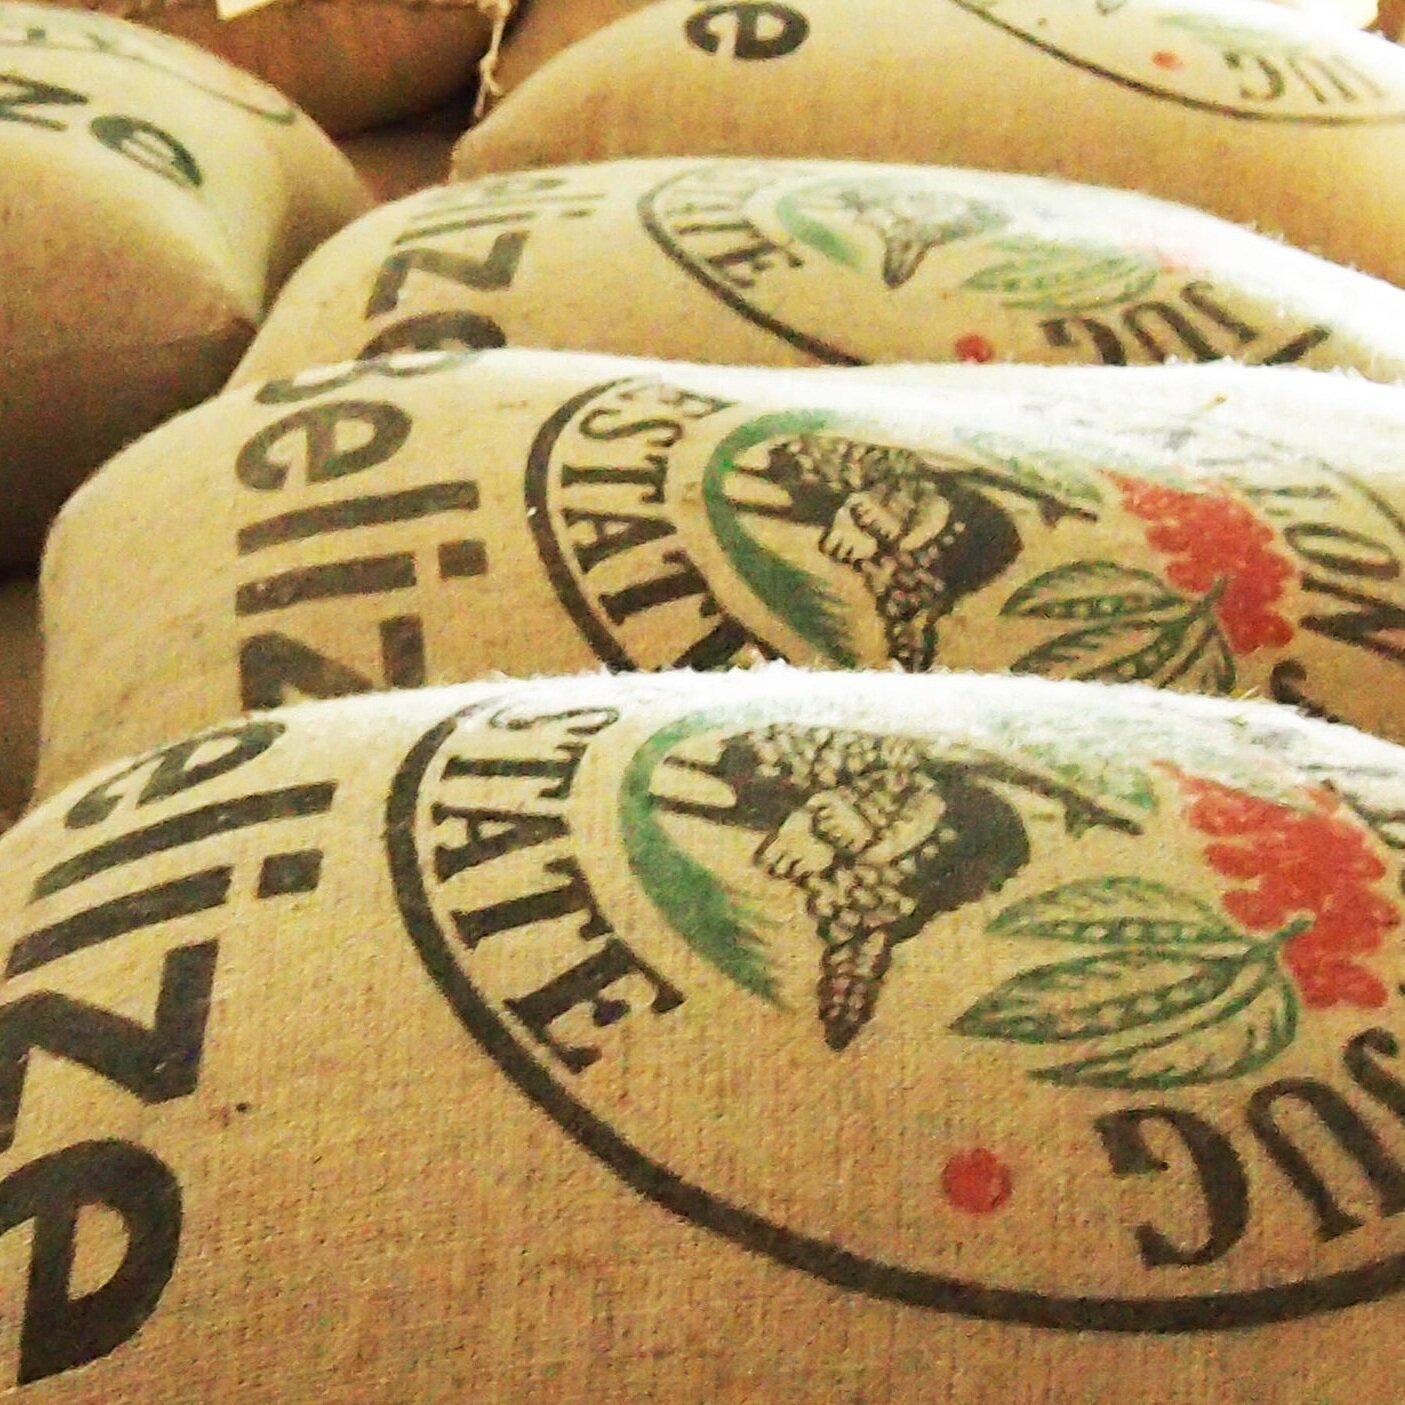 Gallon Jug 100% Artisan Dark Roast Coffee- 16oz — Belizean Coffee Beans